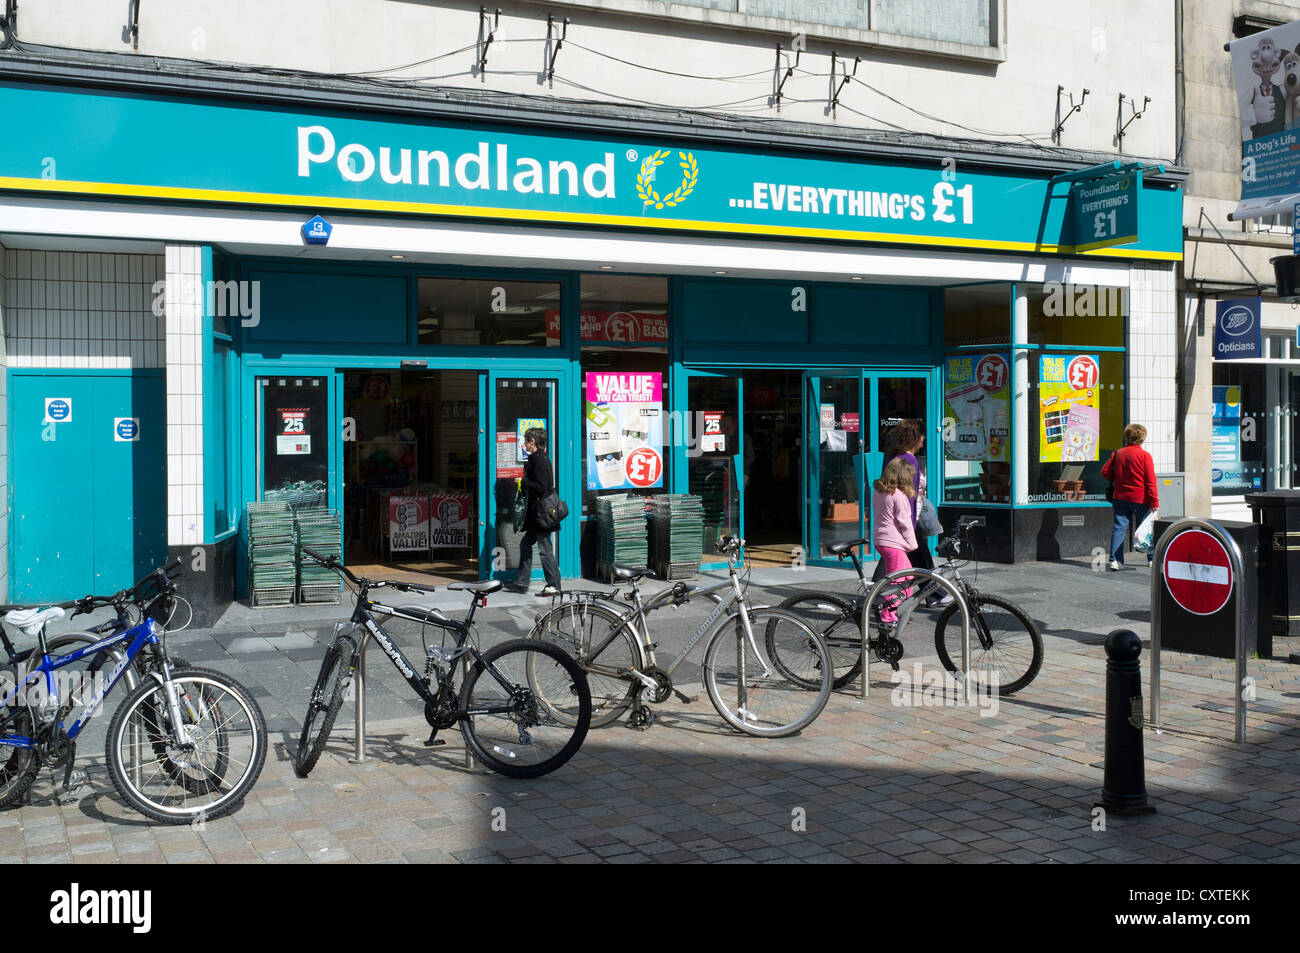 dh bargain shop SHOPPING UK Poundland one pound shop entrance store shopfront retail Stock Photo